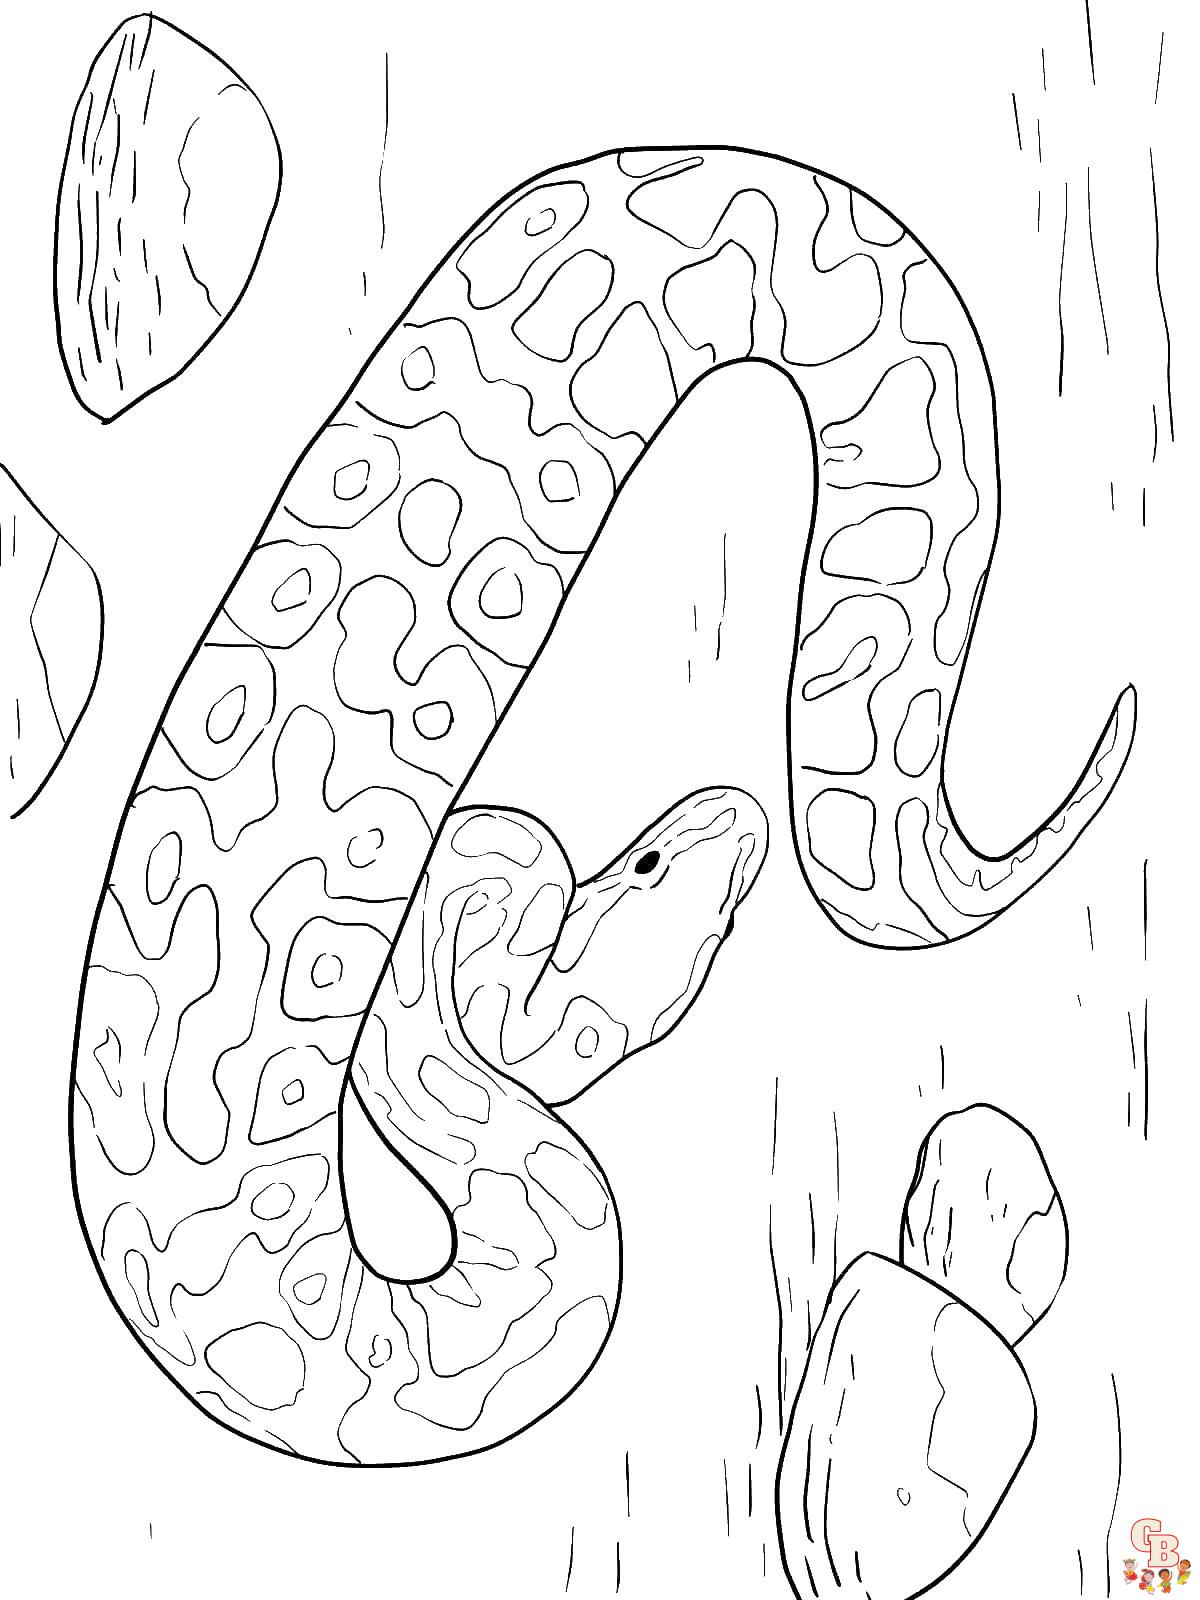 Green Anaconda Coloring page  Animal coloring pages Snake coloring pages  Green anaconda